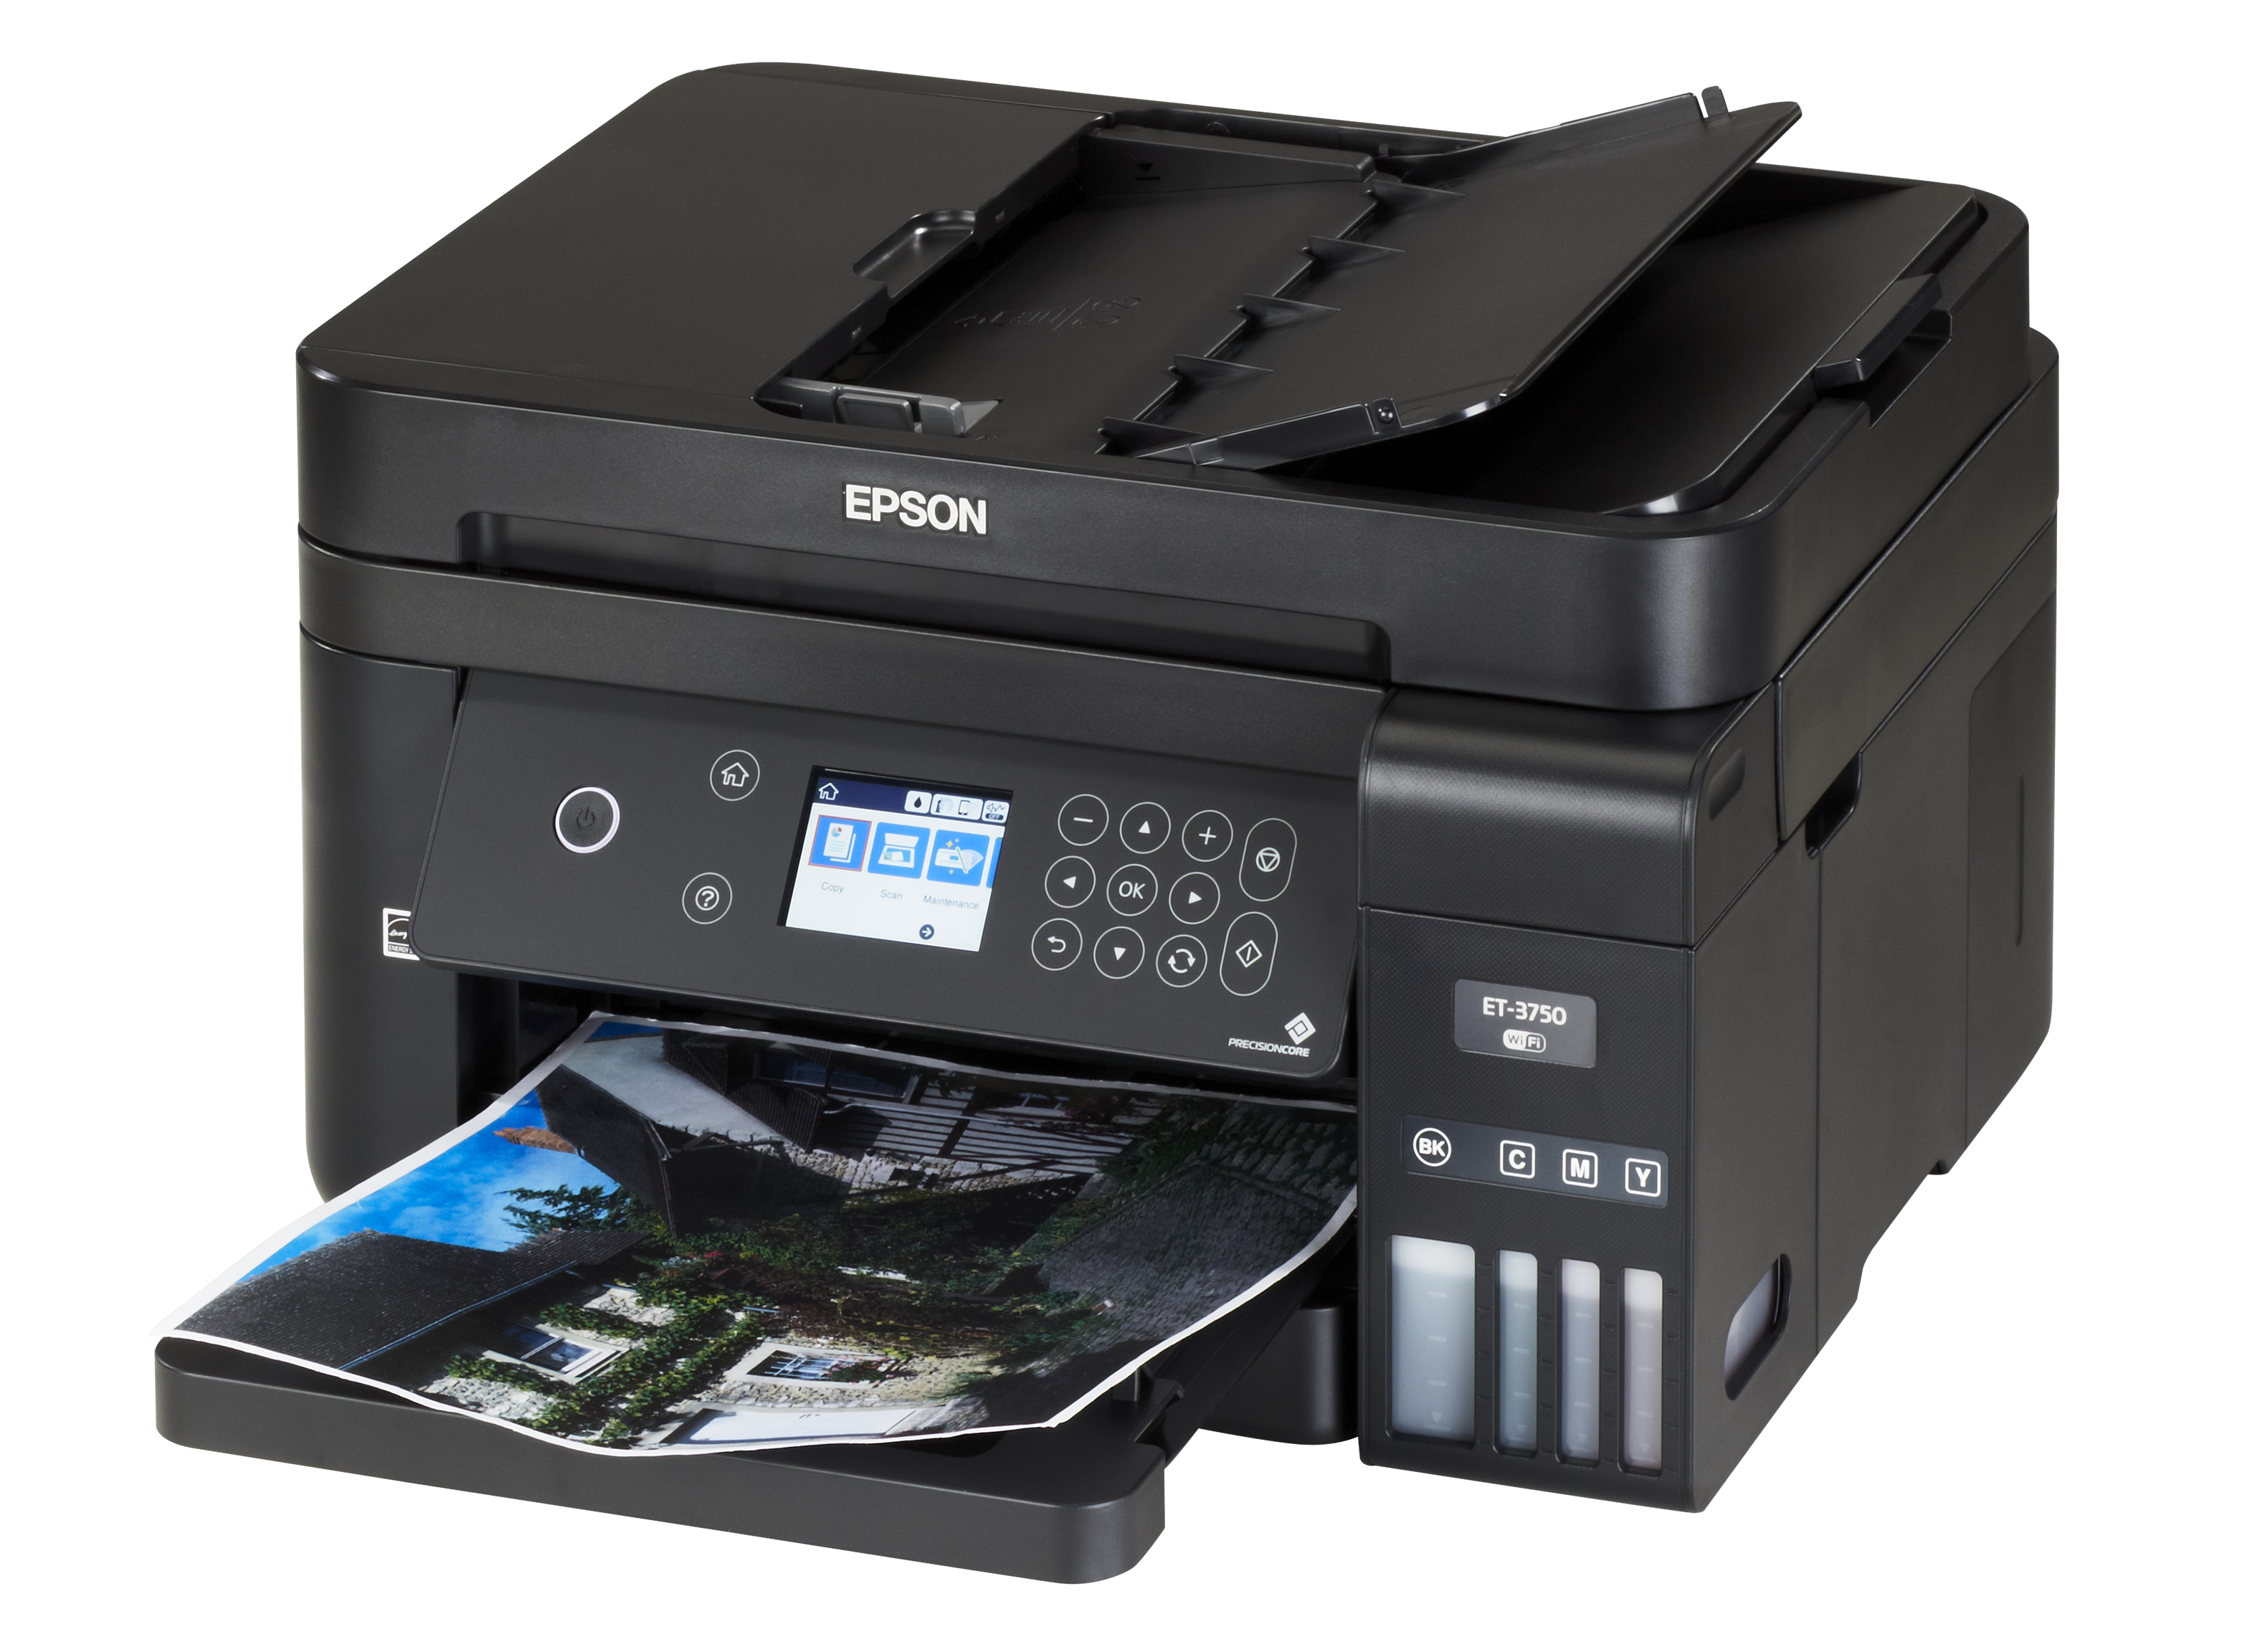 basen Diverse Pak at lægge Epson EcoTank Workforce ET-3750 Printer Review - Consumer Reports